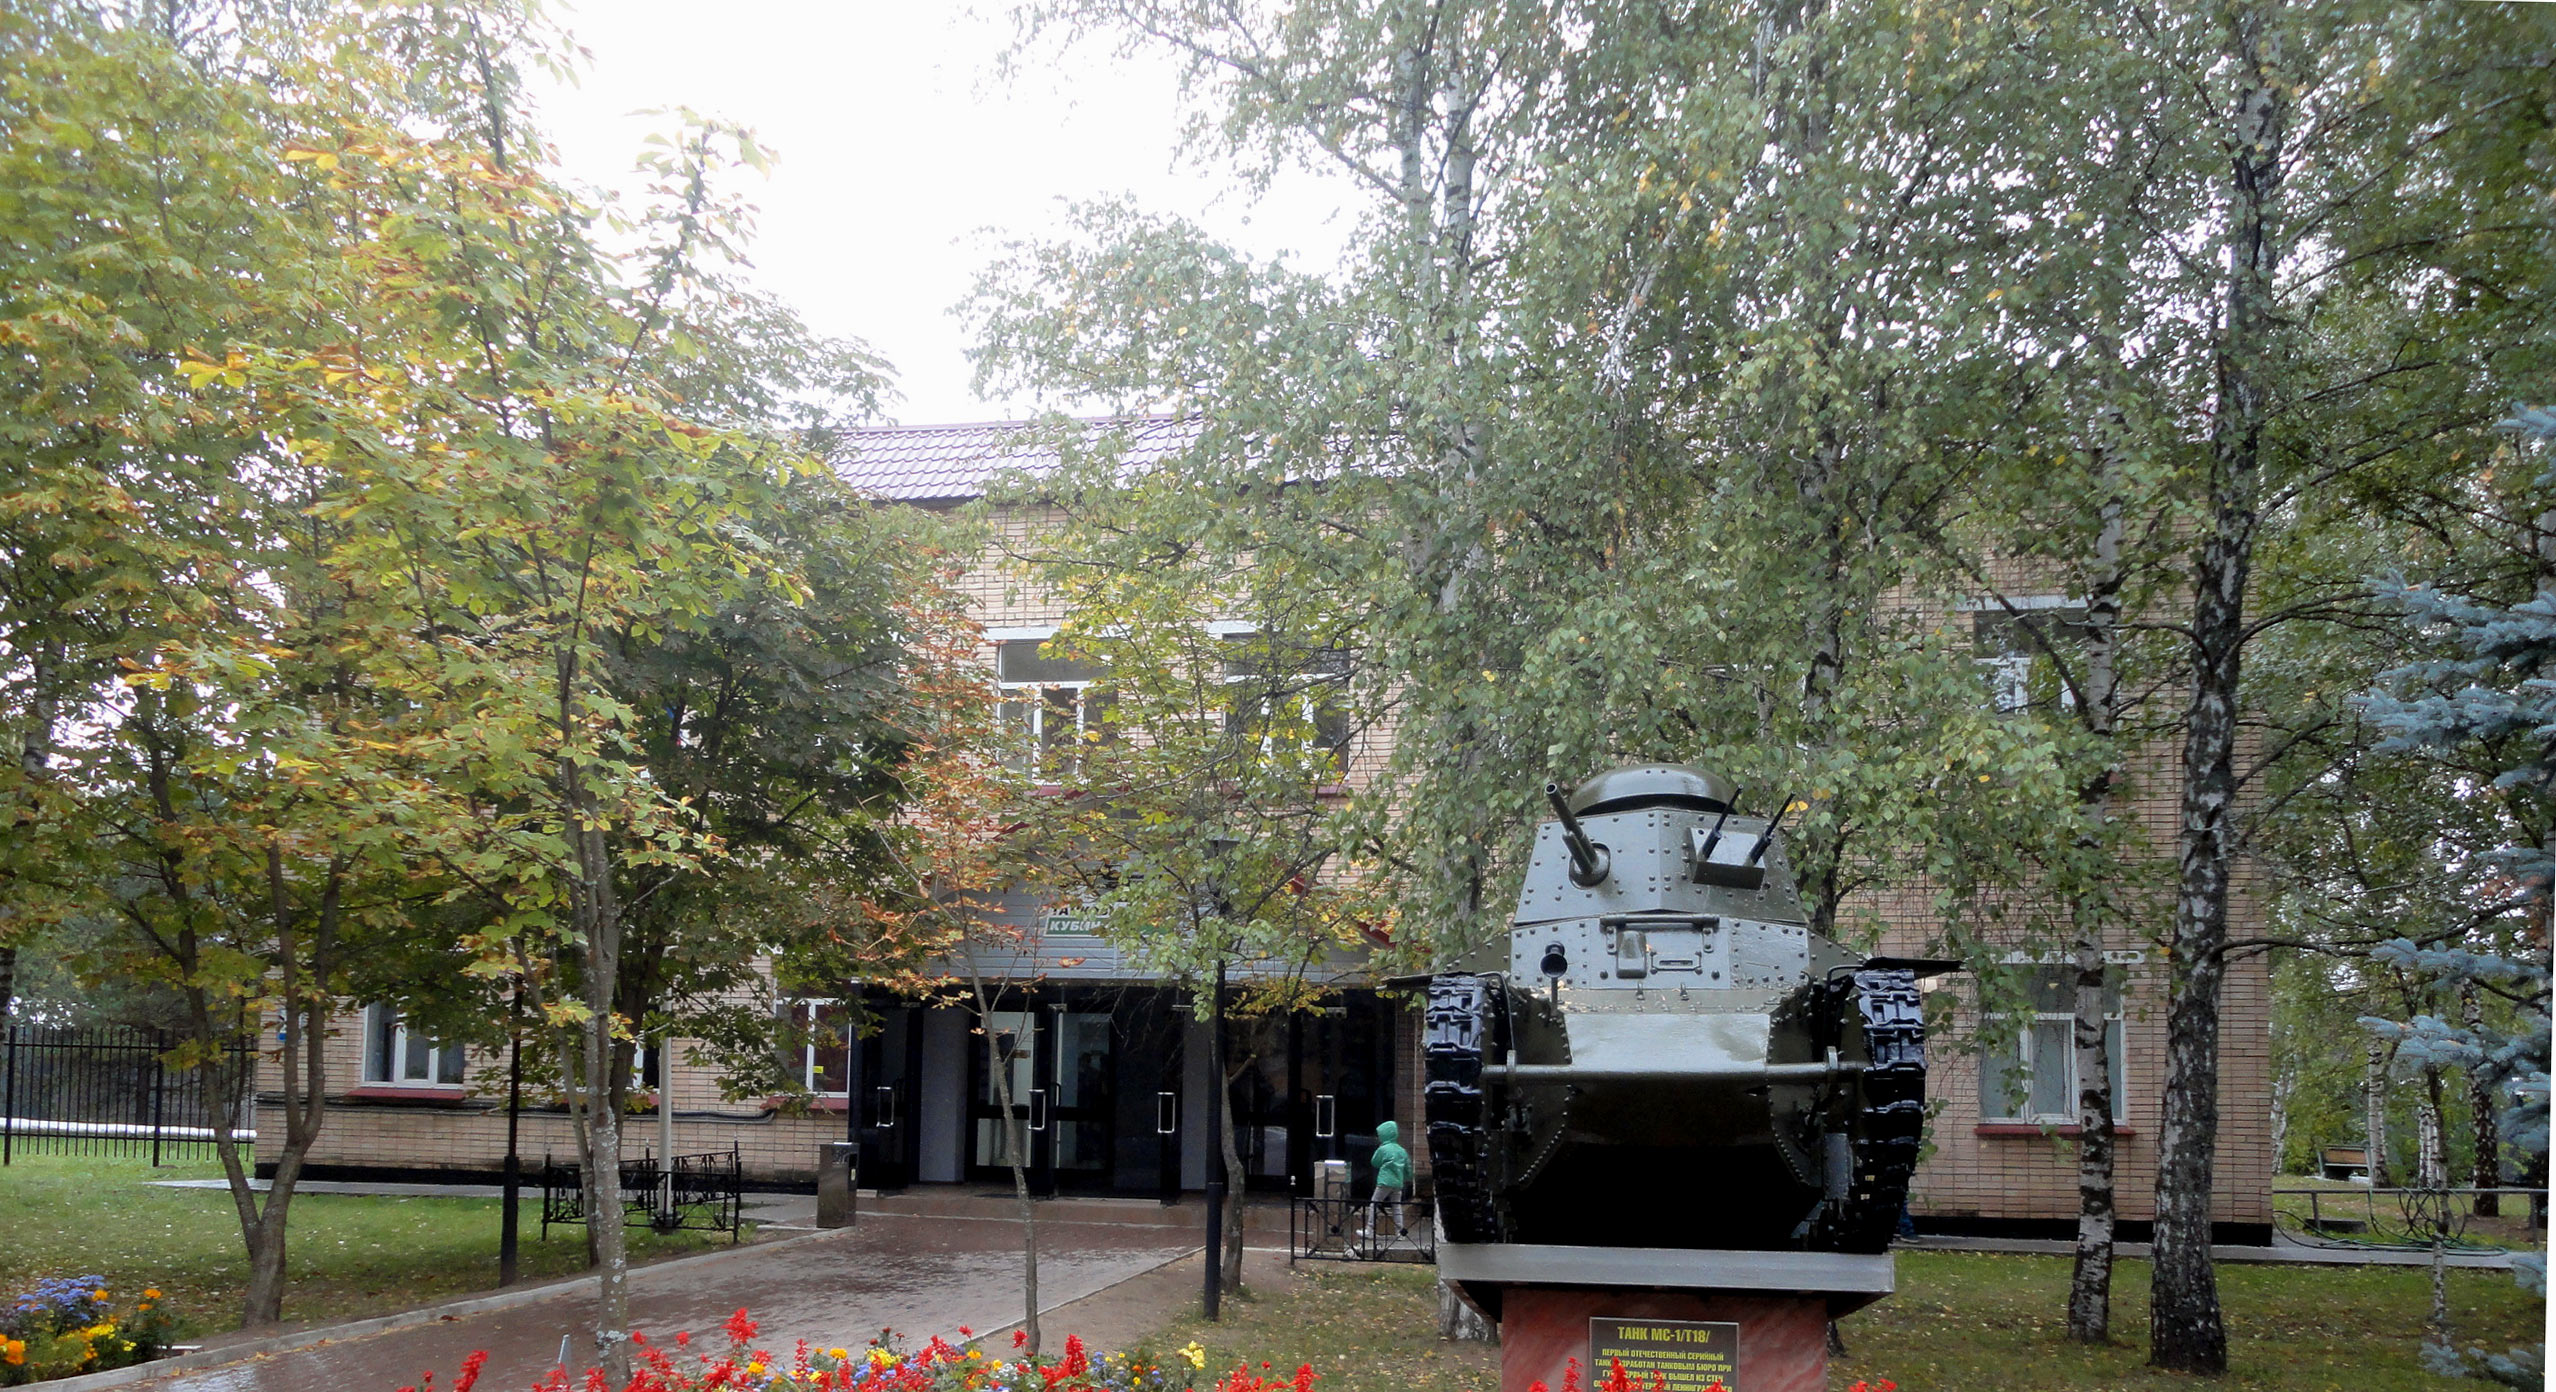 Kubinka tank museum, Russia, Moscow region